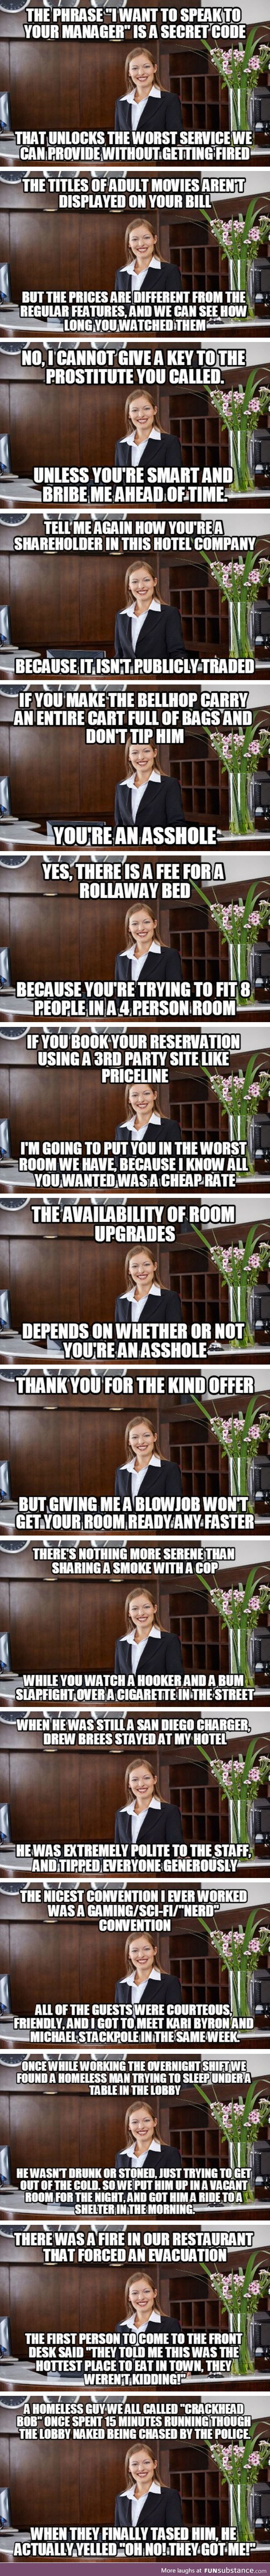 Hotel management 1-2